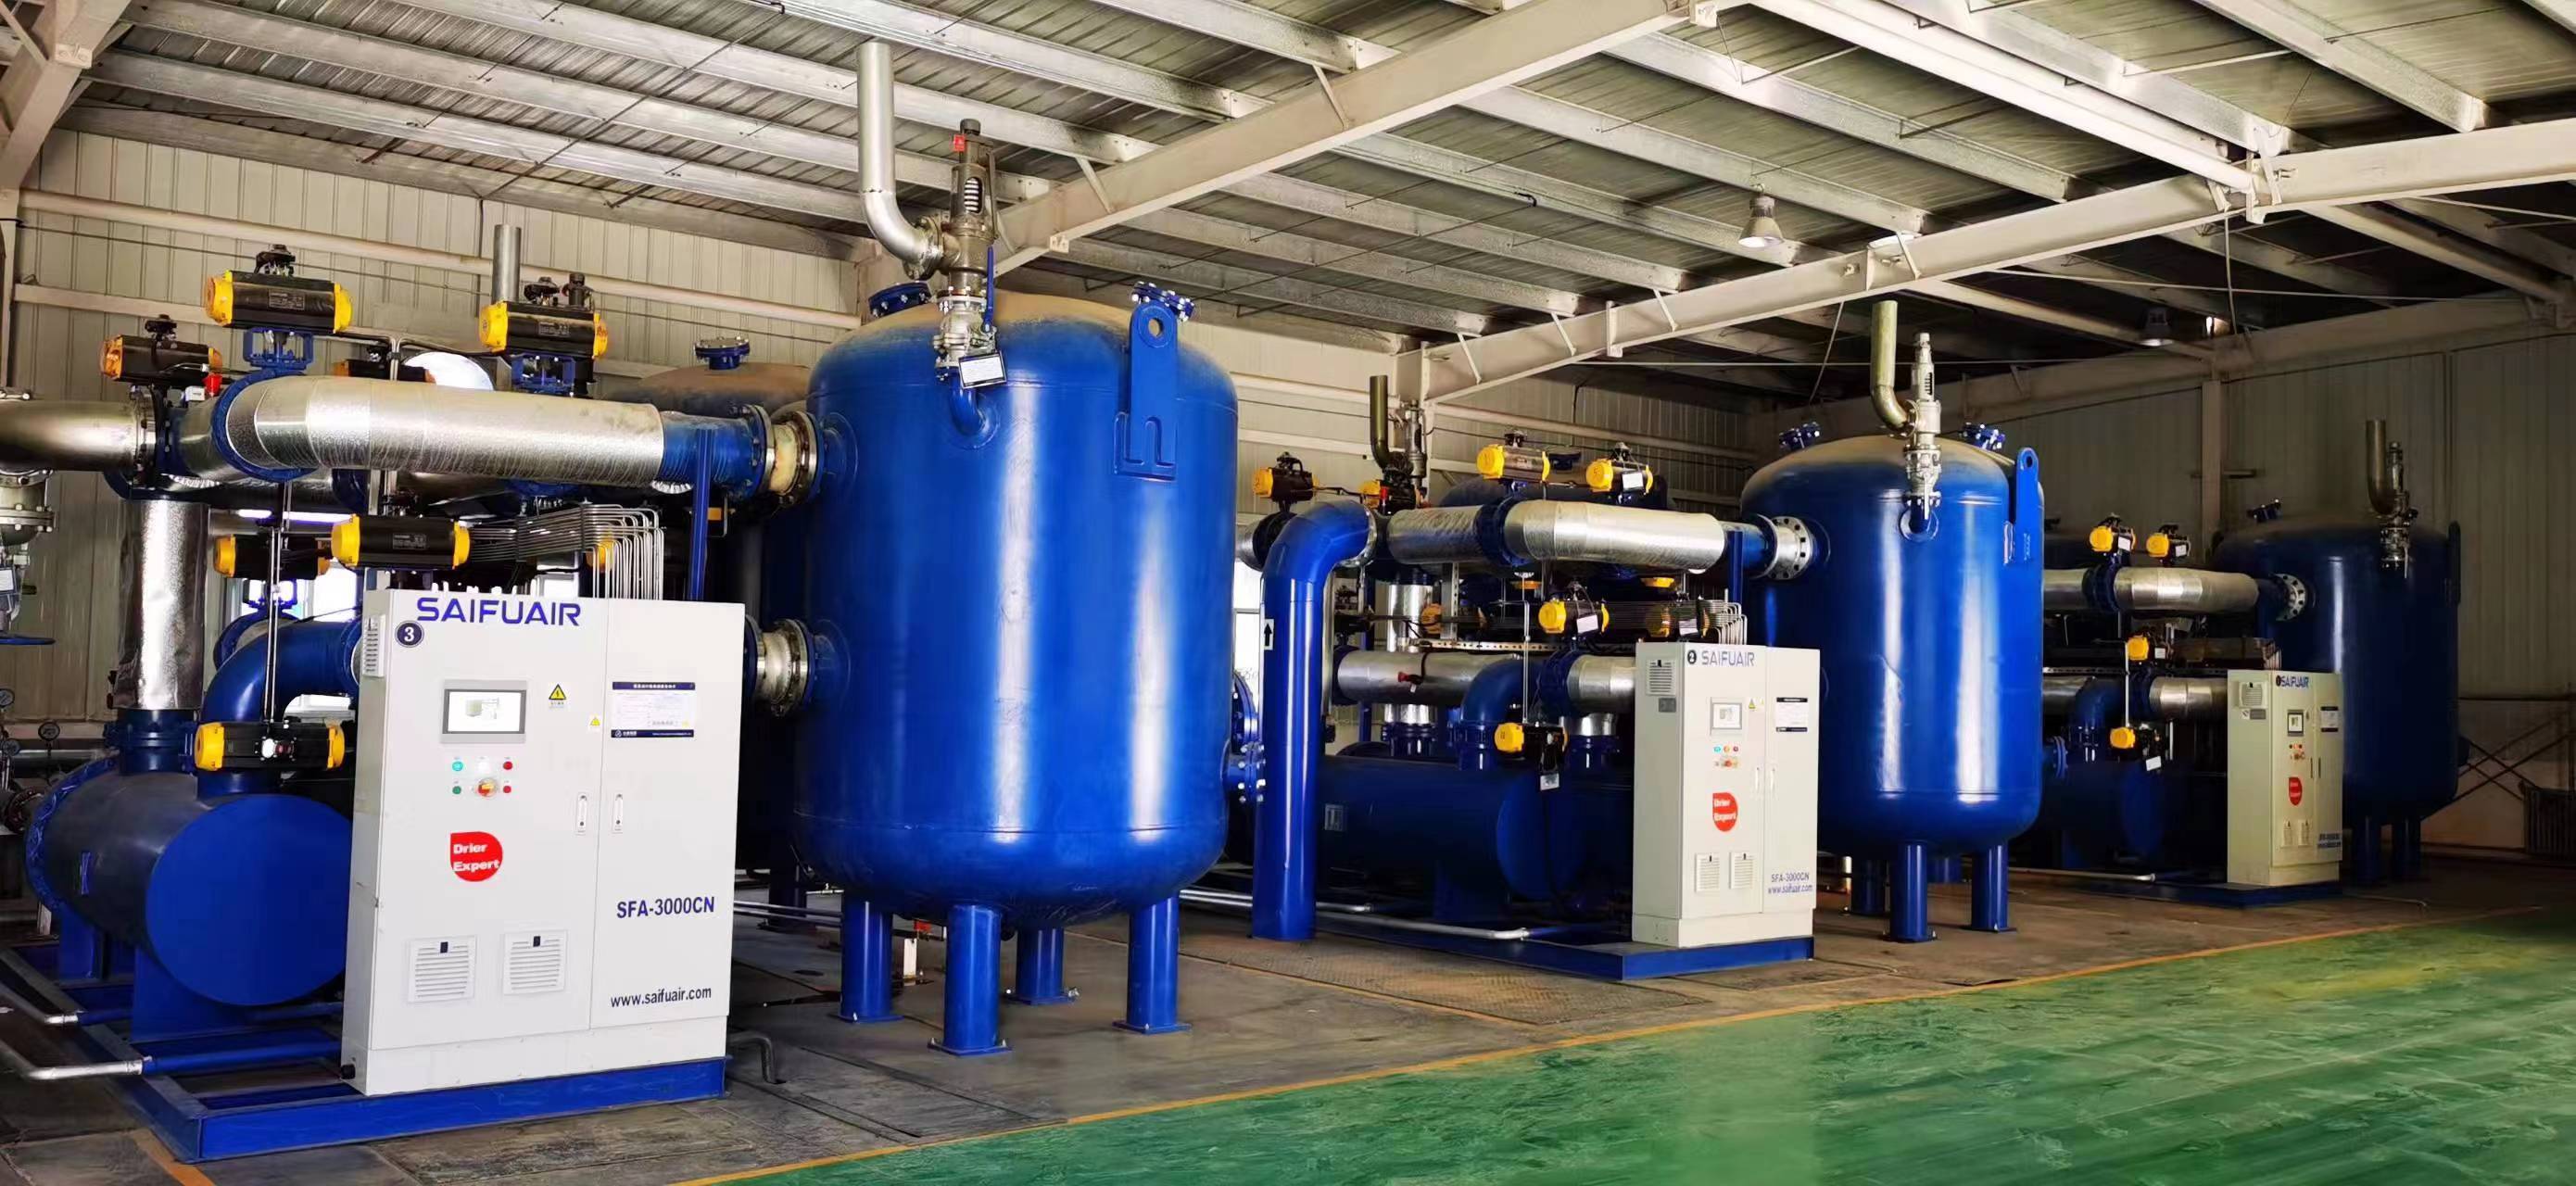 SAIFUAIR compression heat drying machine to help textile enterprises energy-saving new upgrade